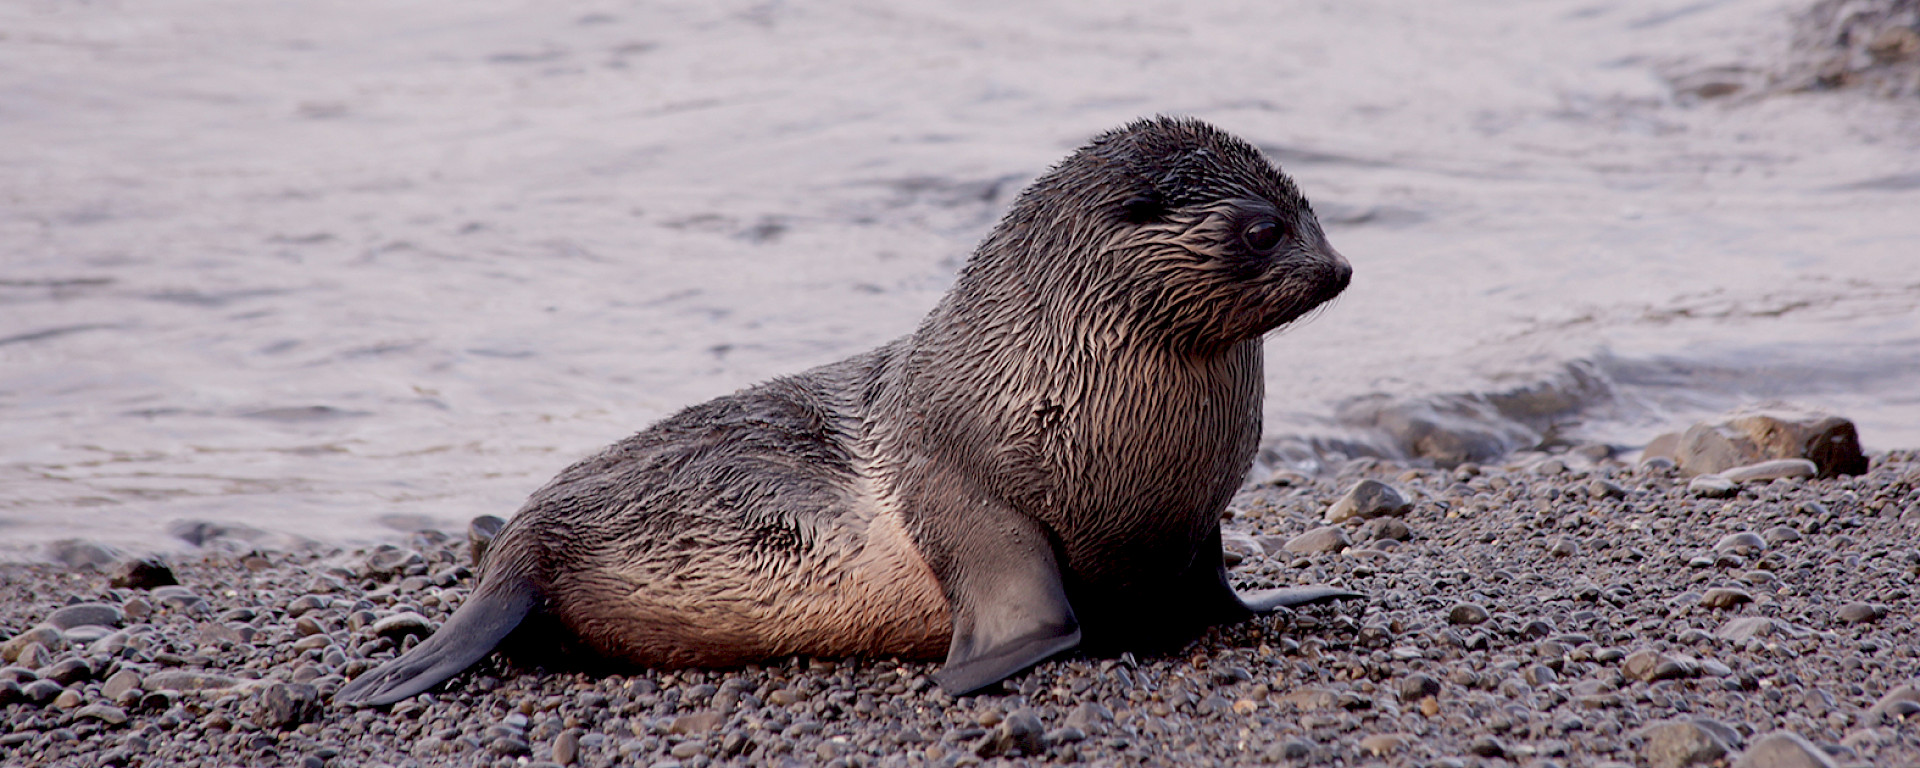 A seal pup on a beach.